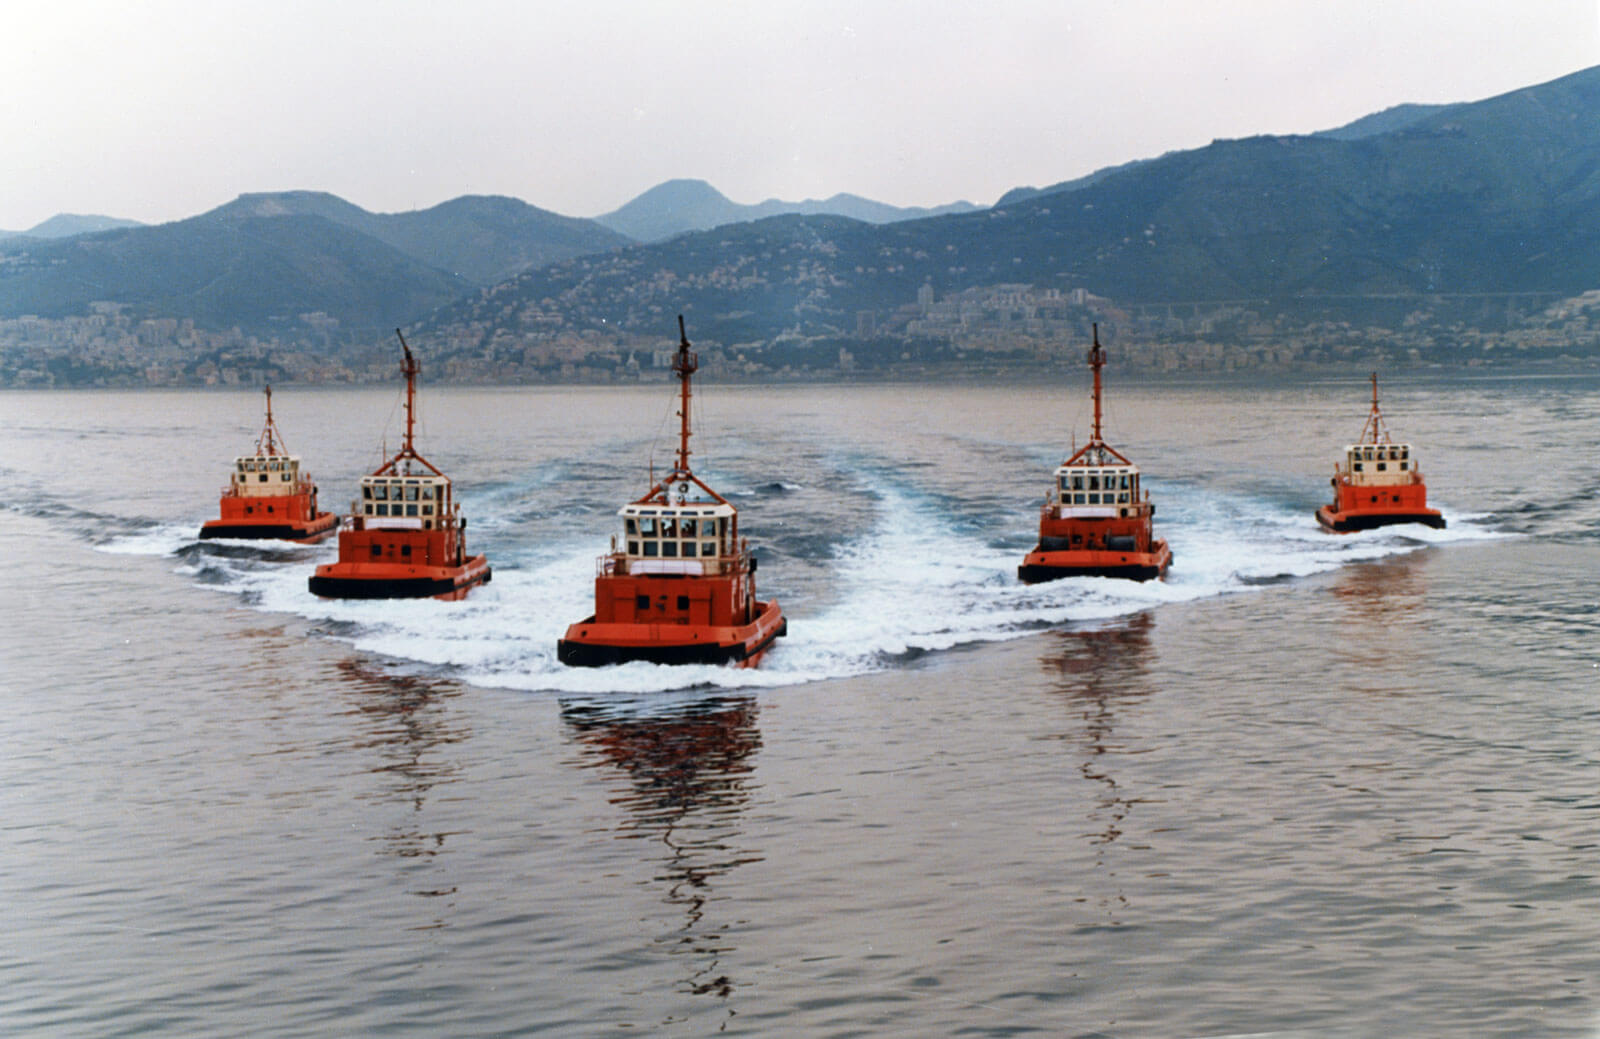 Group of azimuth-driven tugboats built by the Ferrari shipyard in La Spezia.